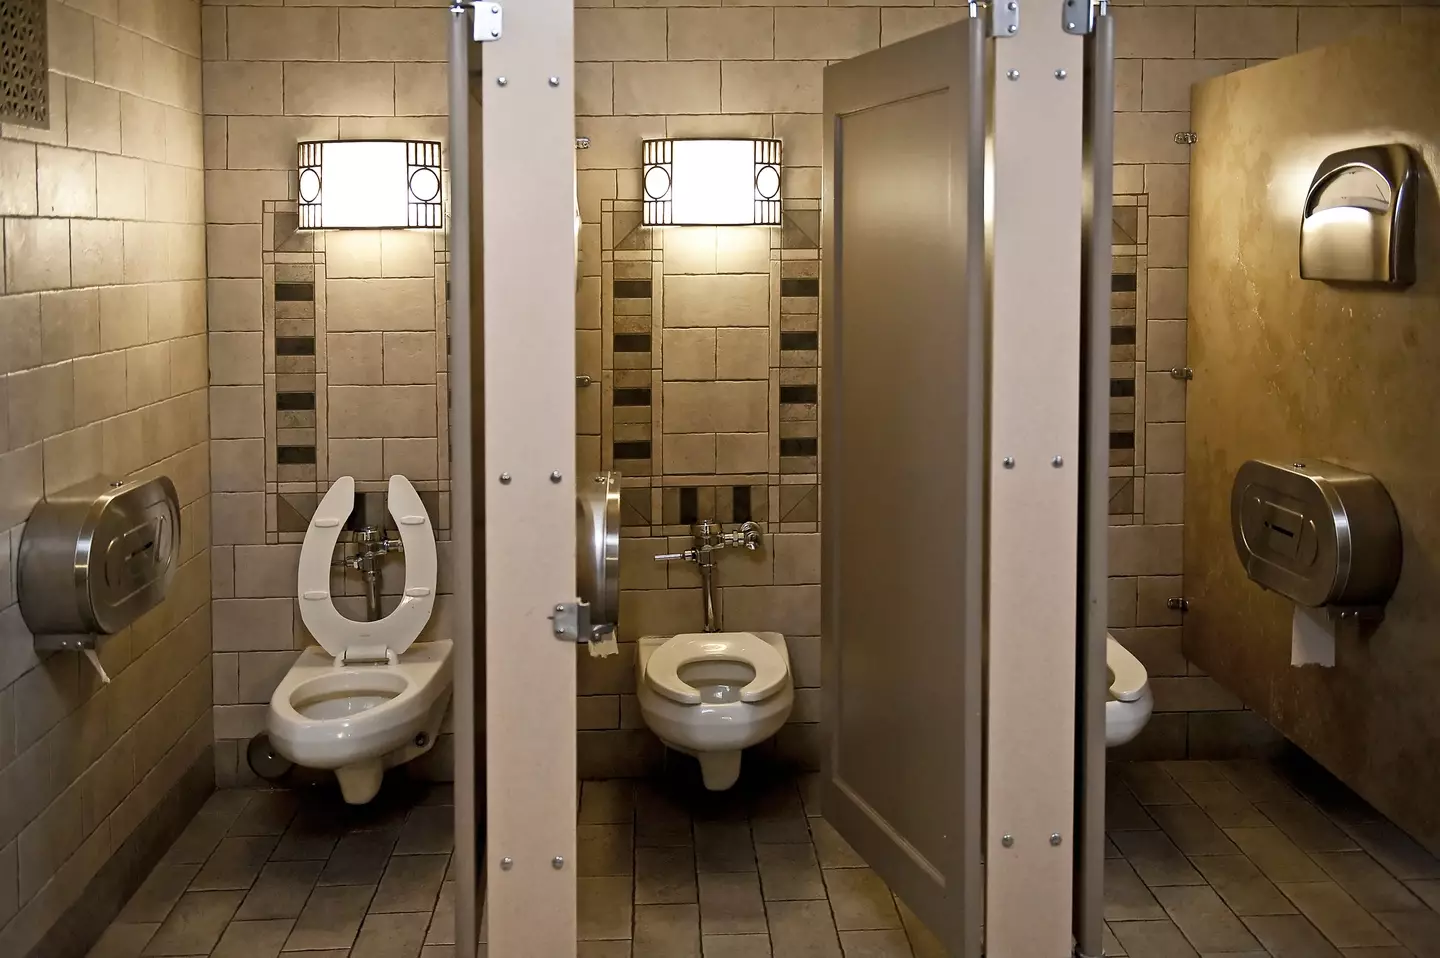 Public toilet seats typically boast a U-shape.